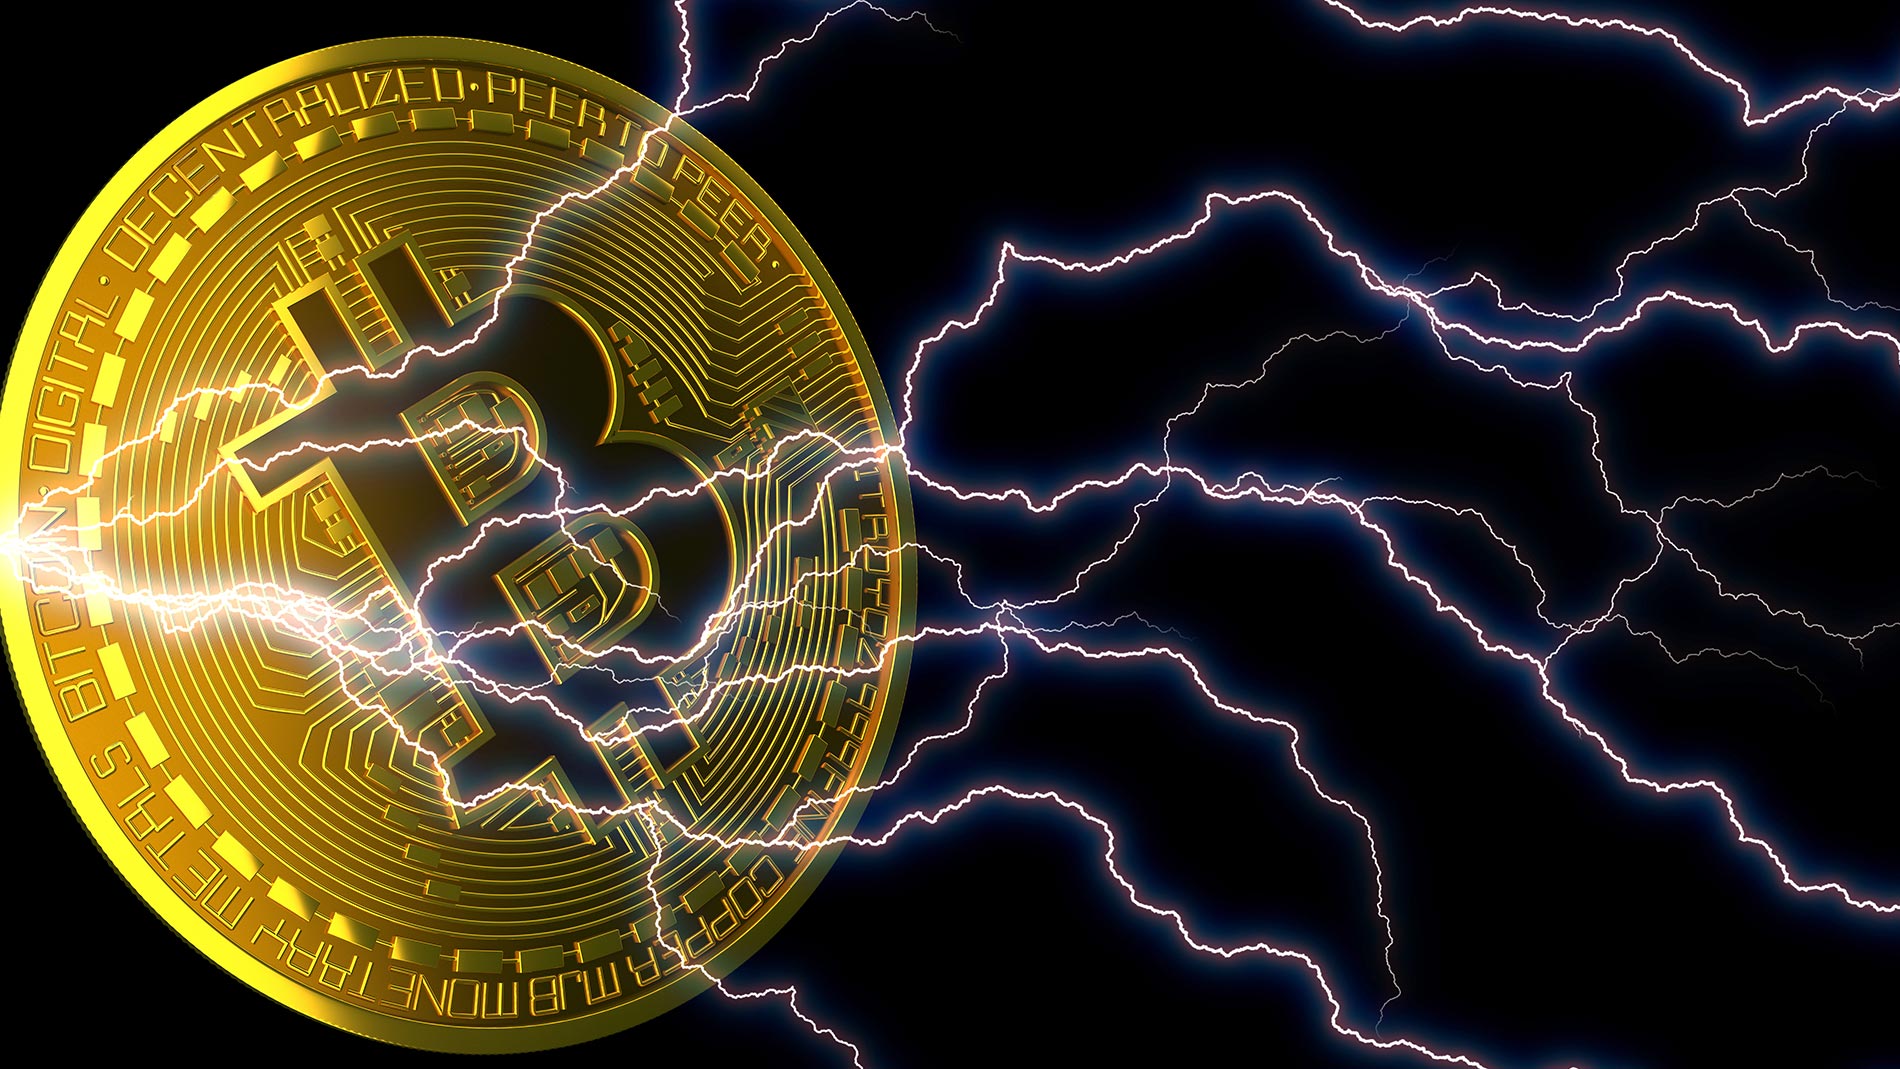 bitcoin lightning node